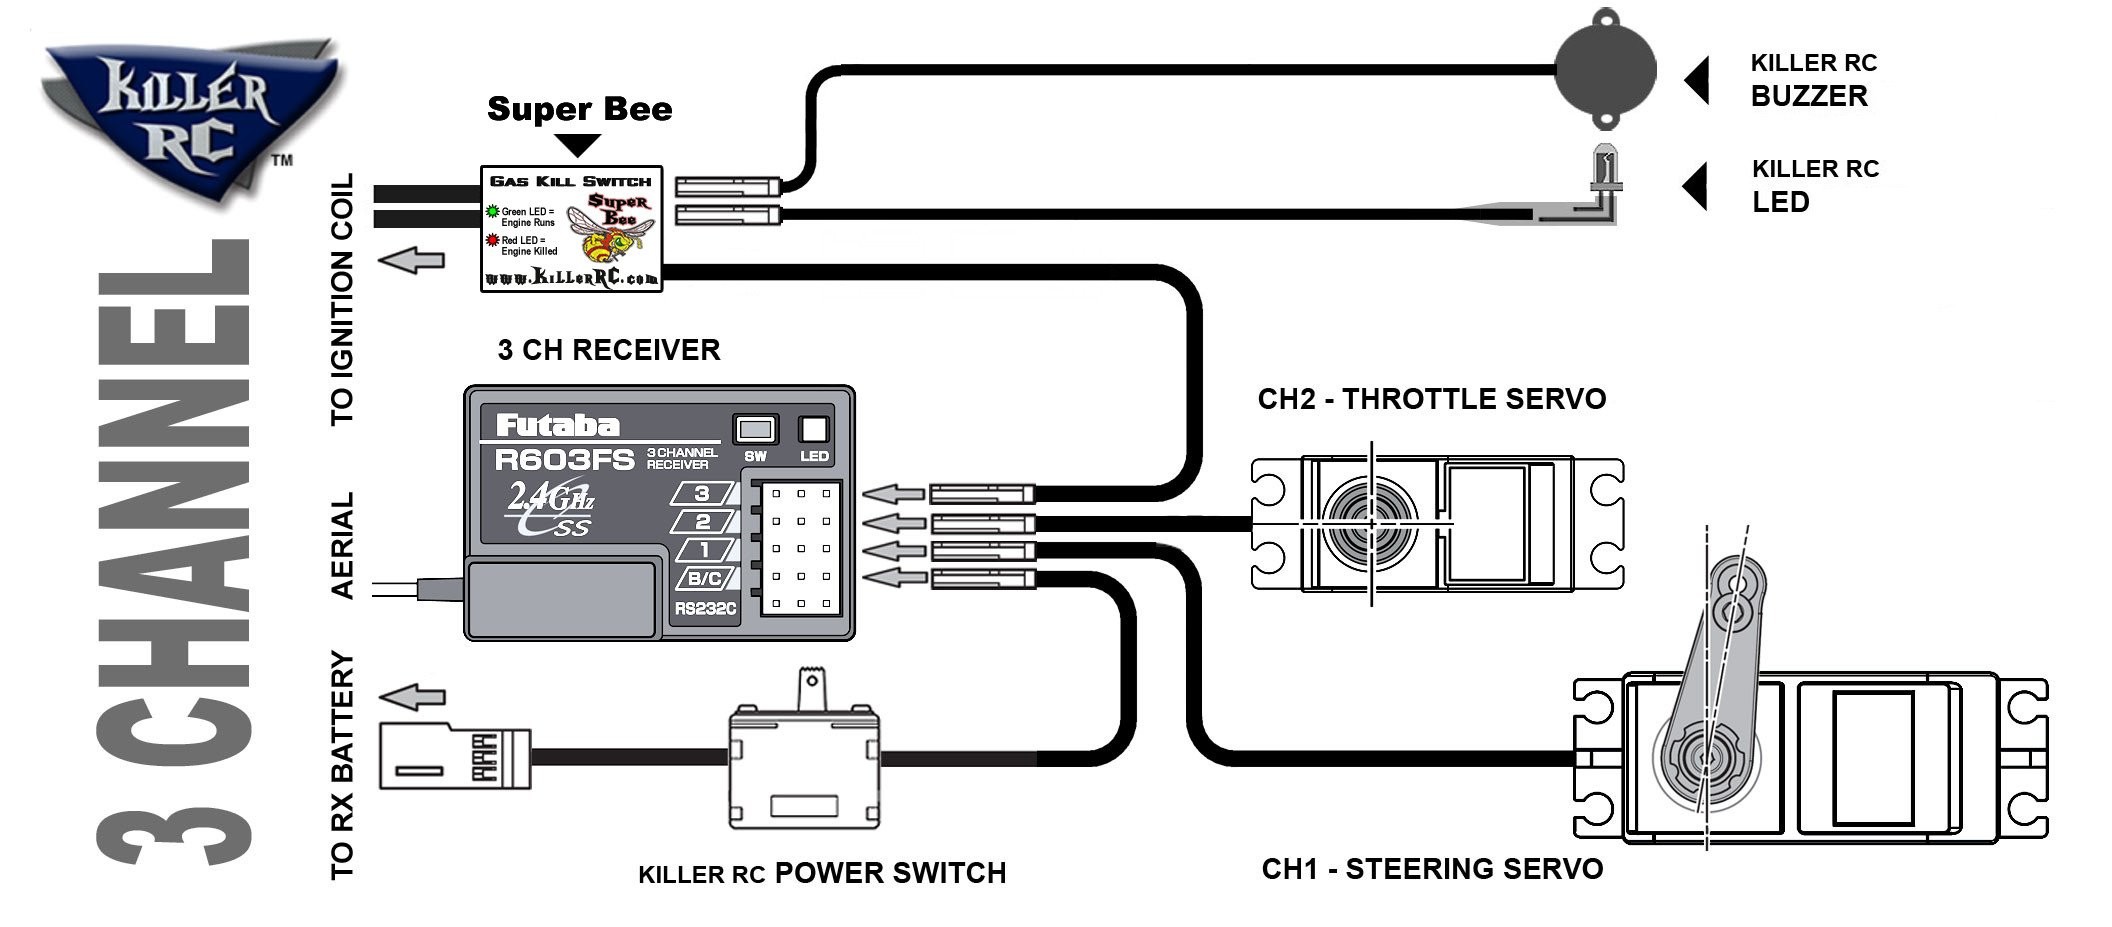 Direct Servo Subwoofer Wiring Diagram from mainetreasurechest.com